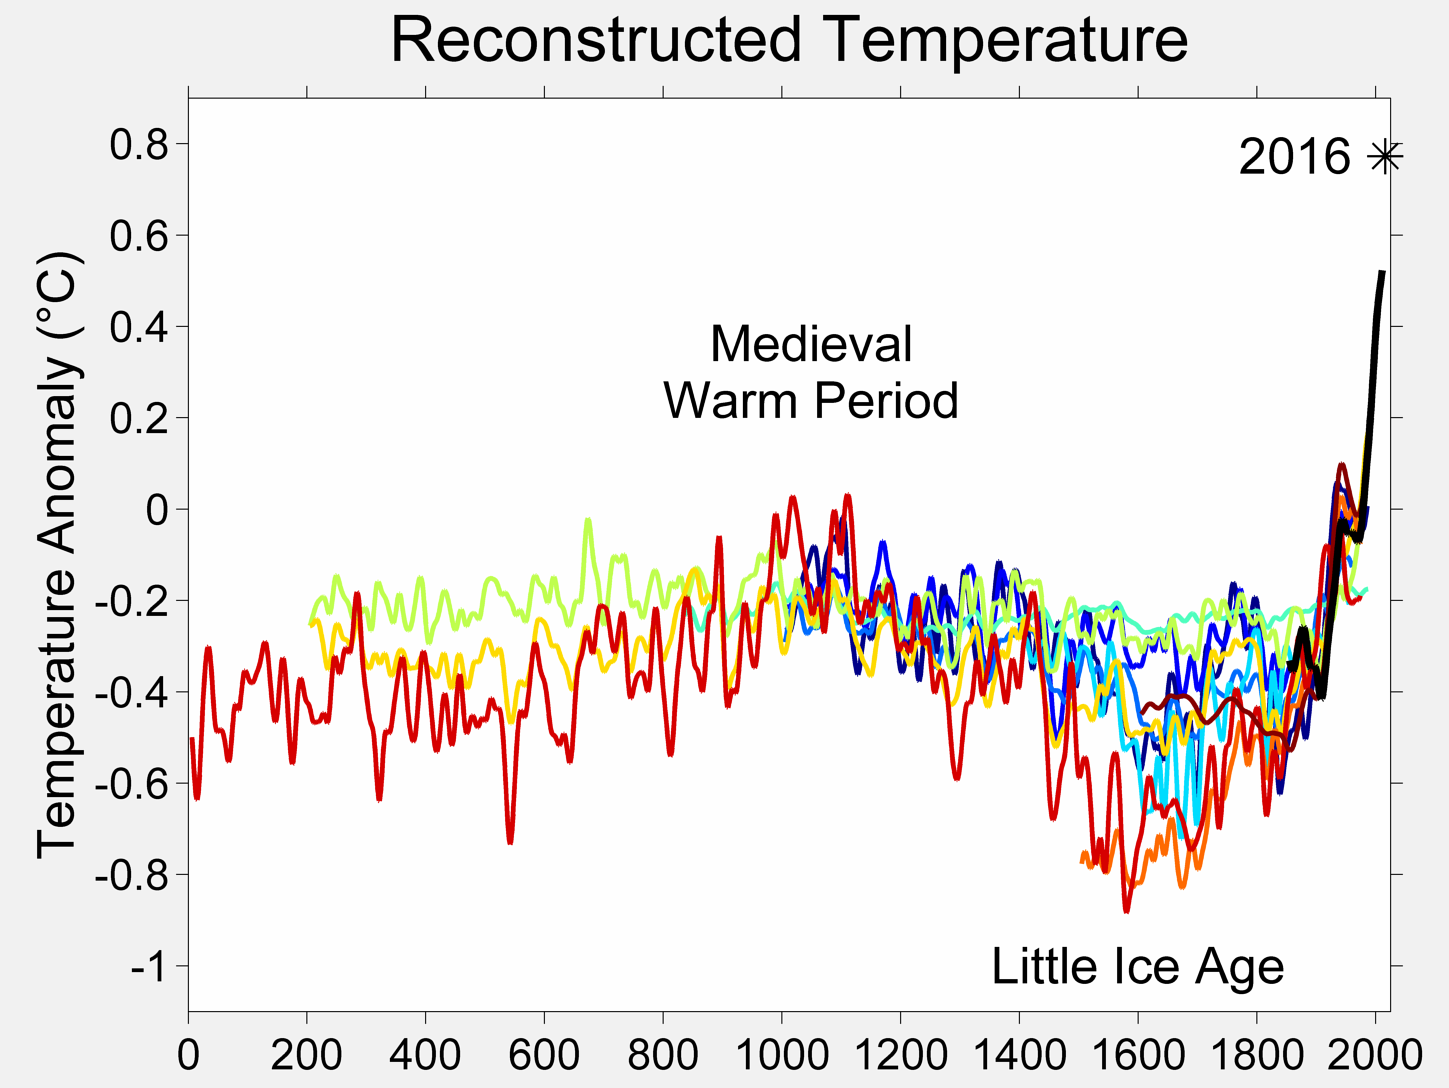 0-2000 Reconstructed temperature